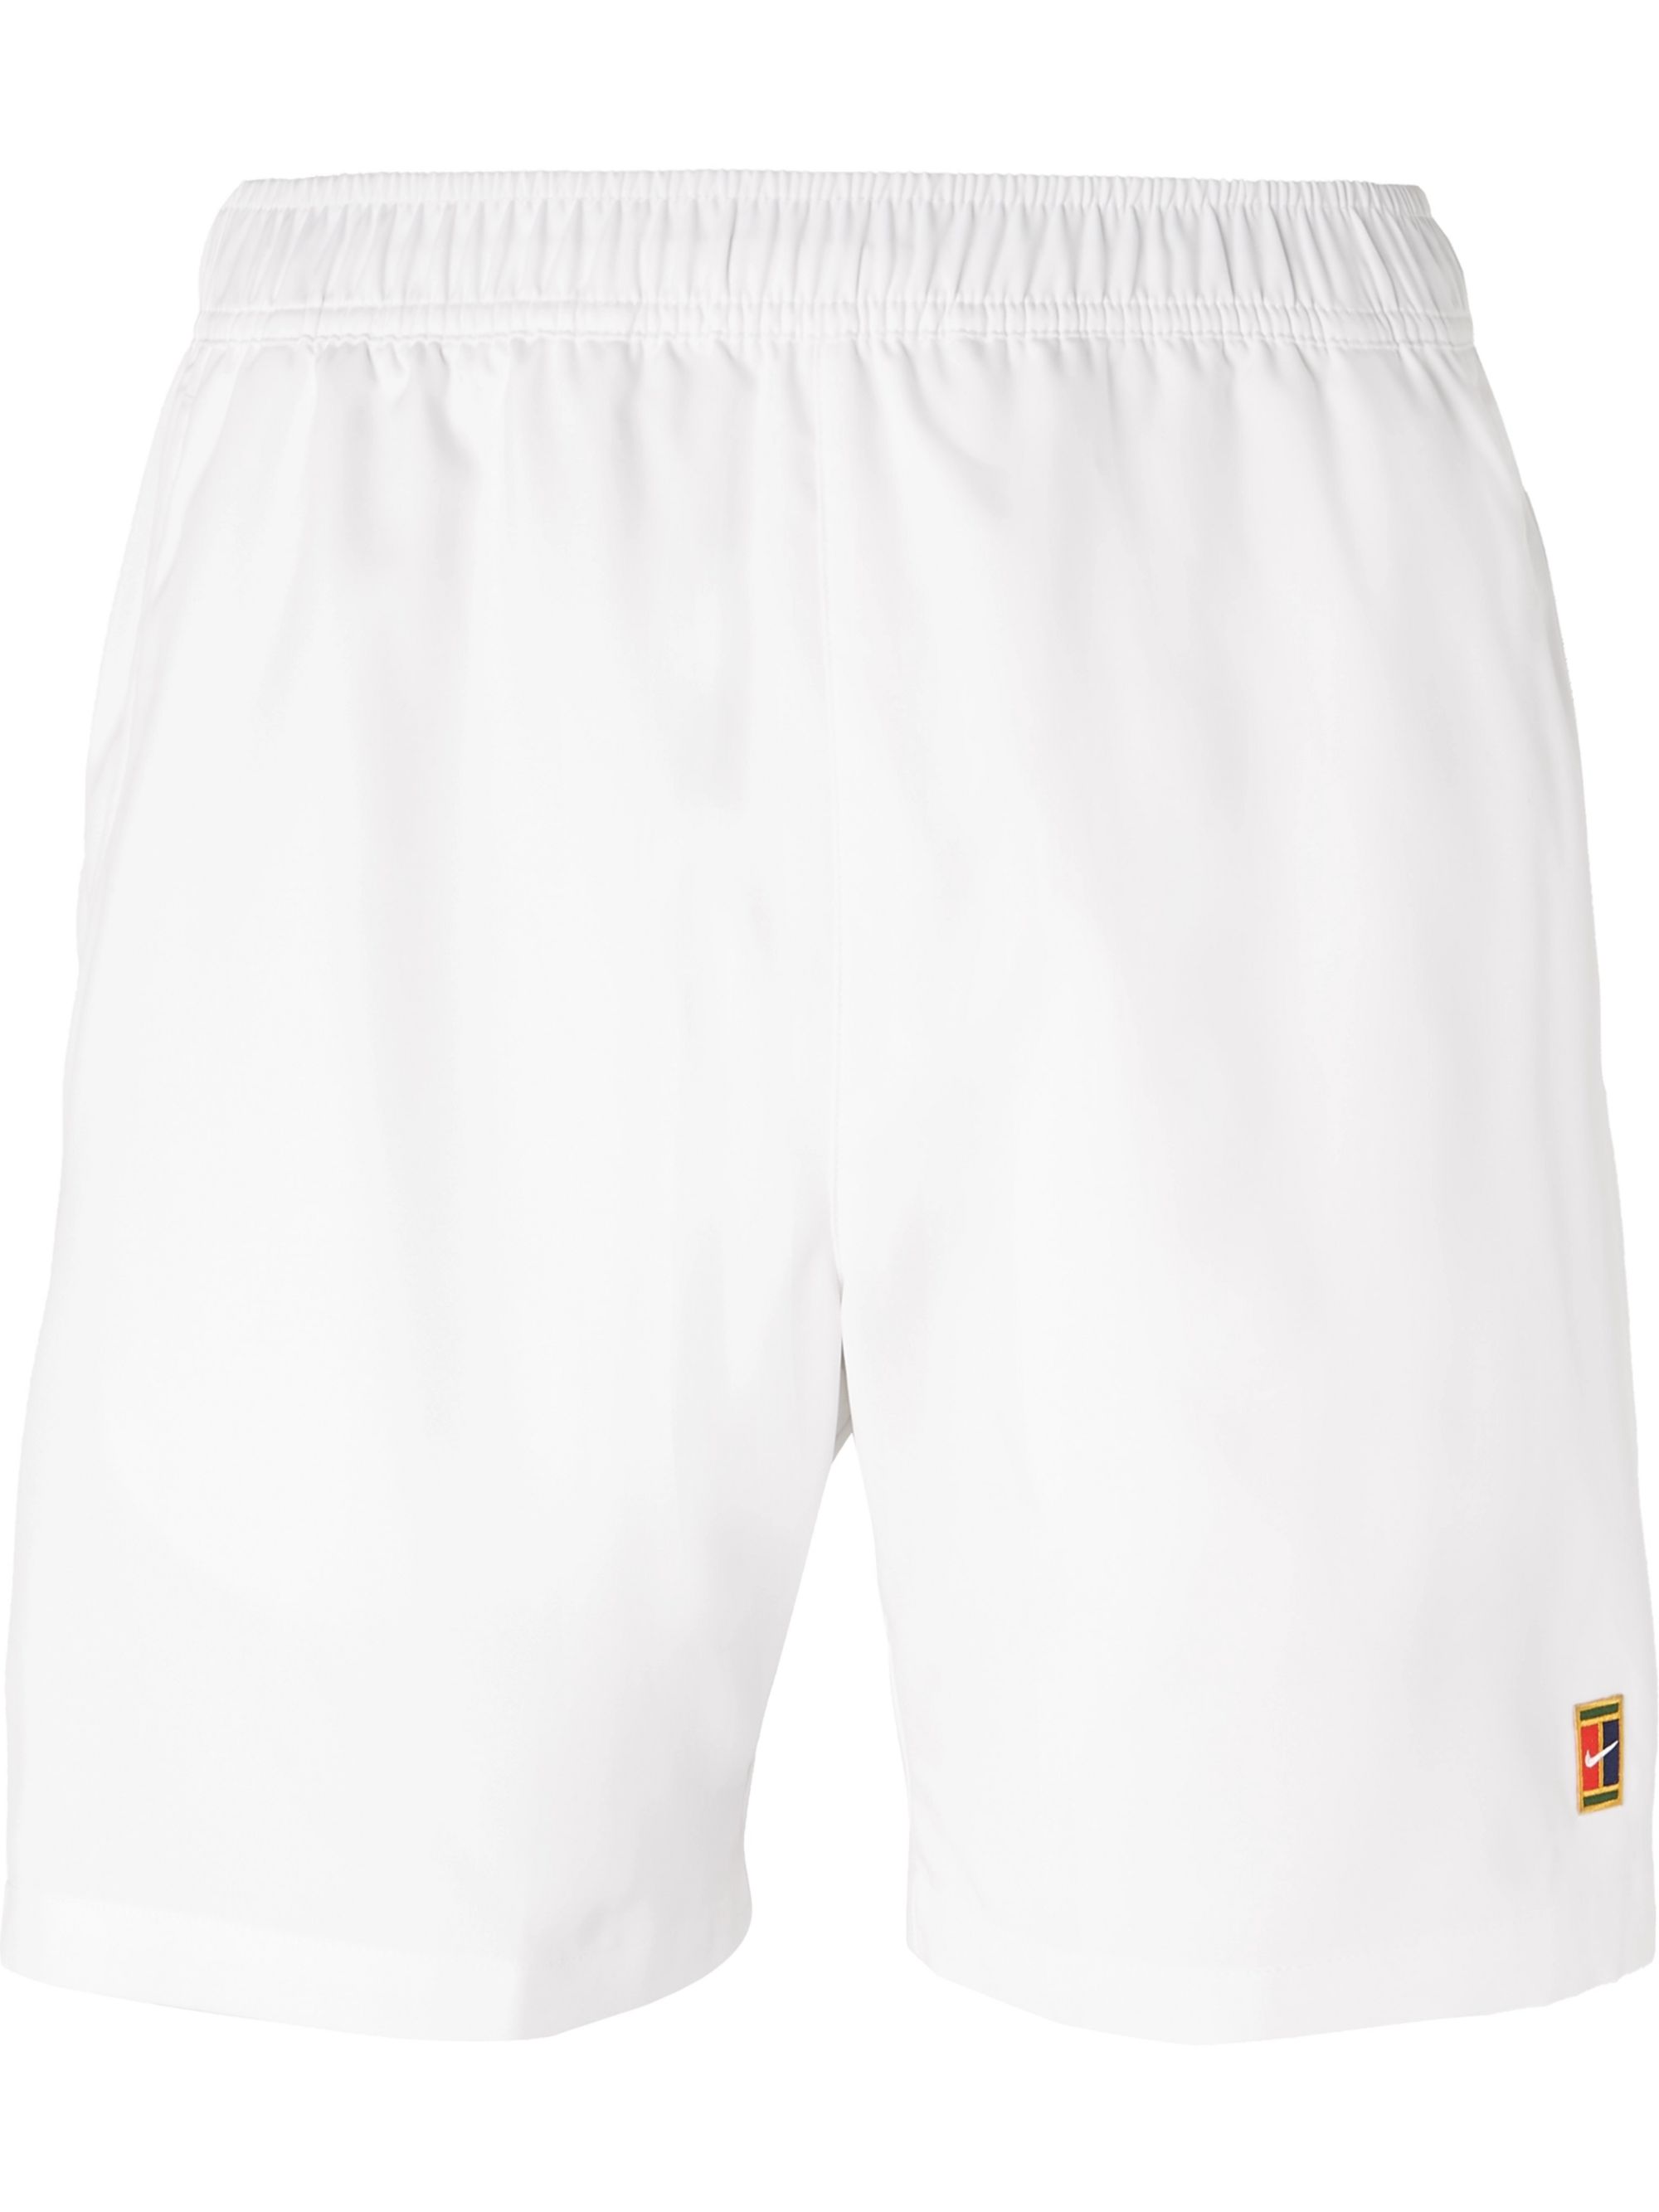 nike court tennis shorts online -